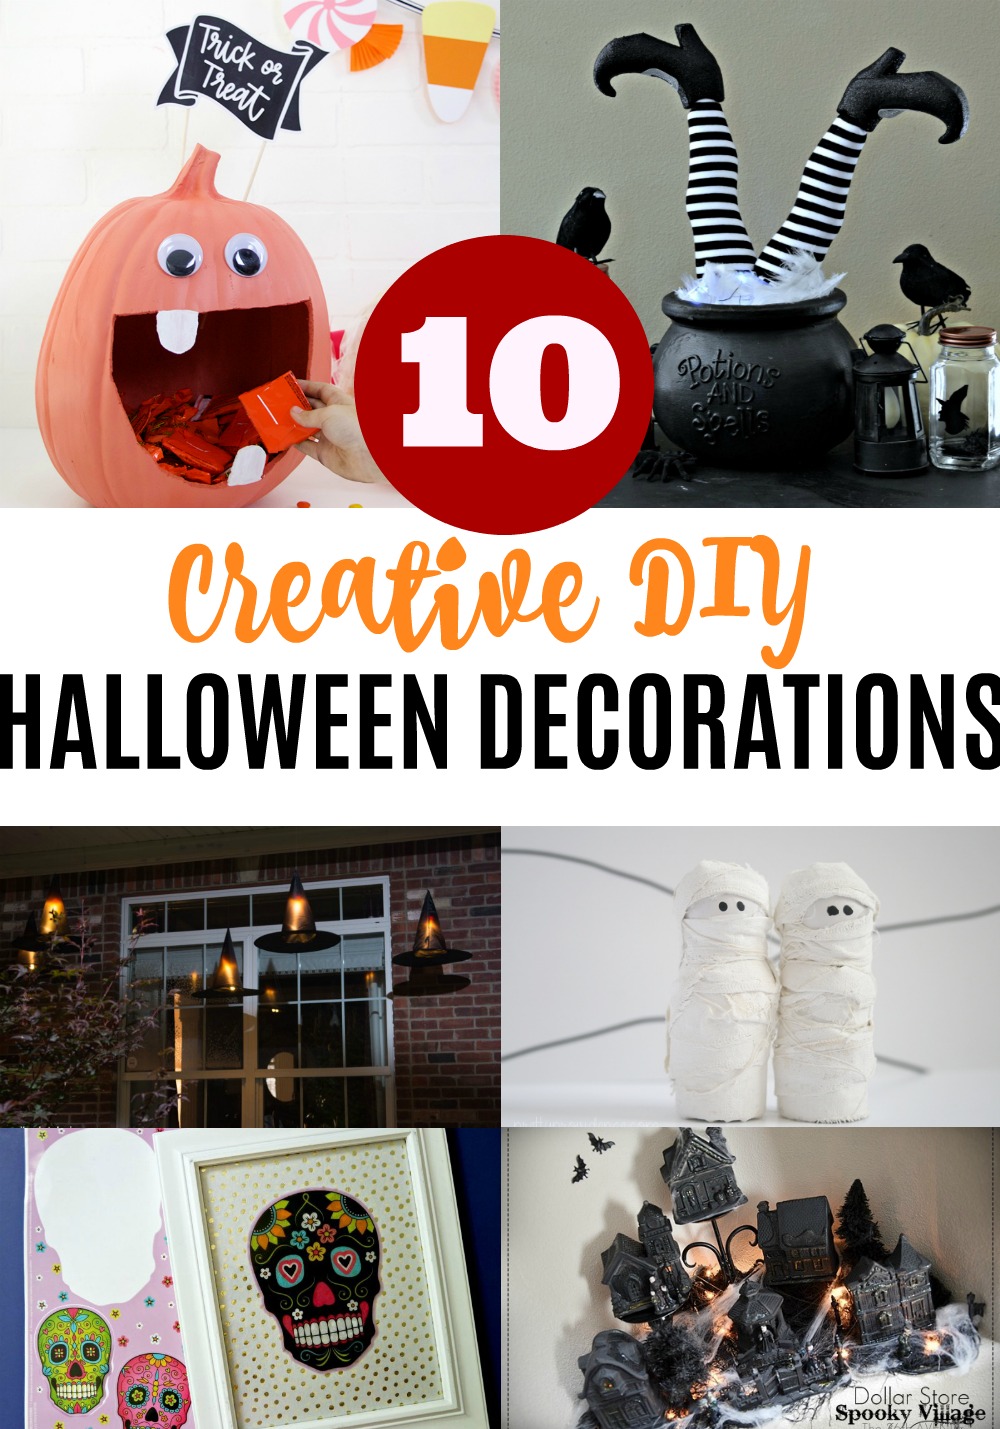 Resin Crafts Blog | DIY Halloween Decorations | Creative Halloween Decor | Cool Crafts | Halloween Crafts | Halloween Decorations | Fall Decorations | DIY Fall Decor | via @resincraftsblog